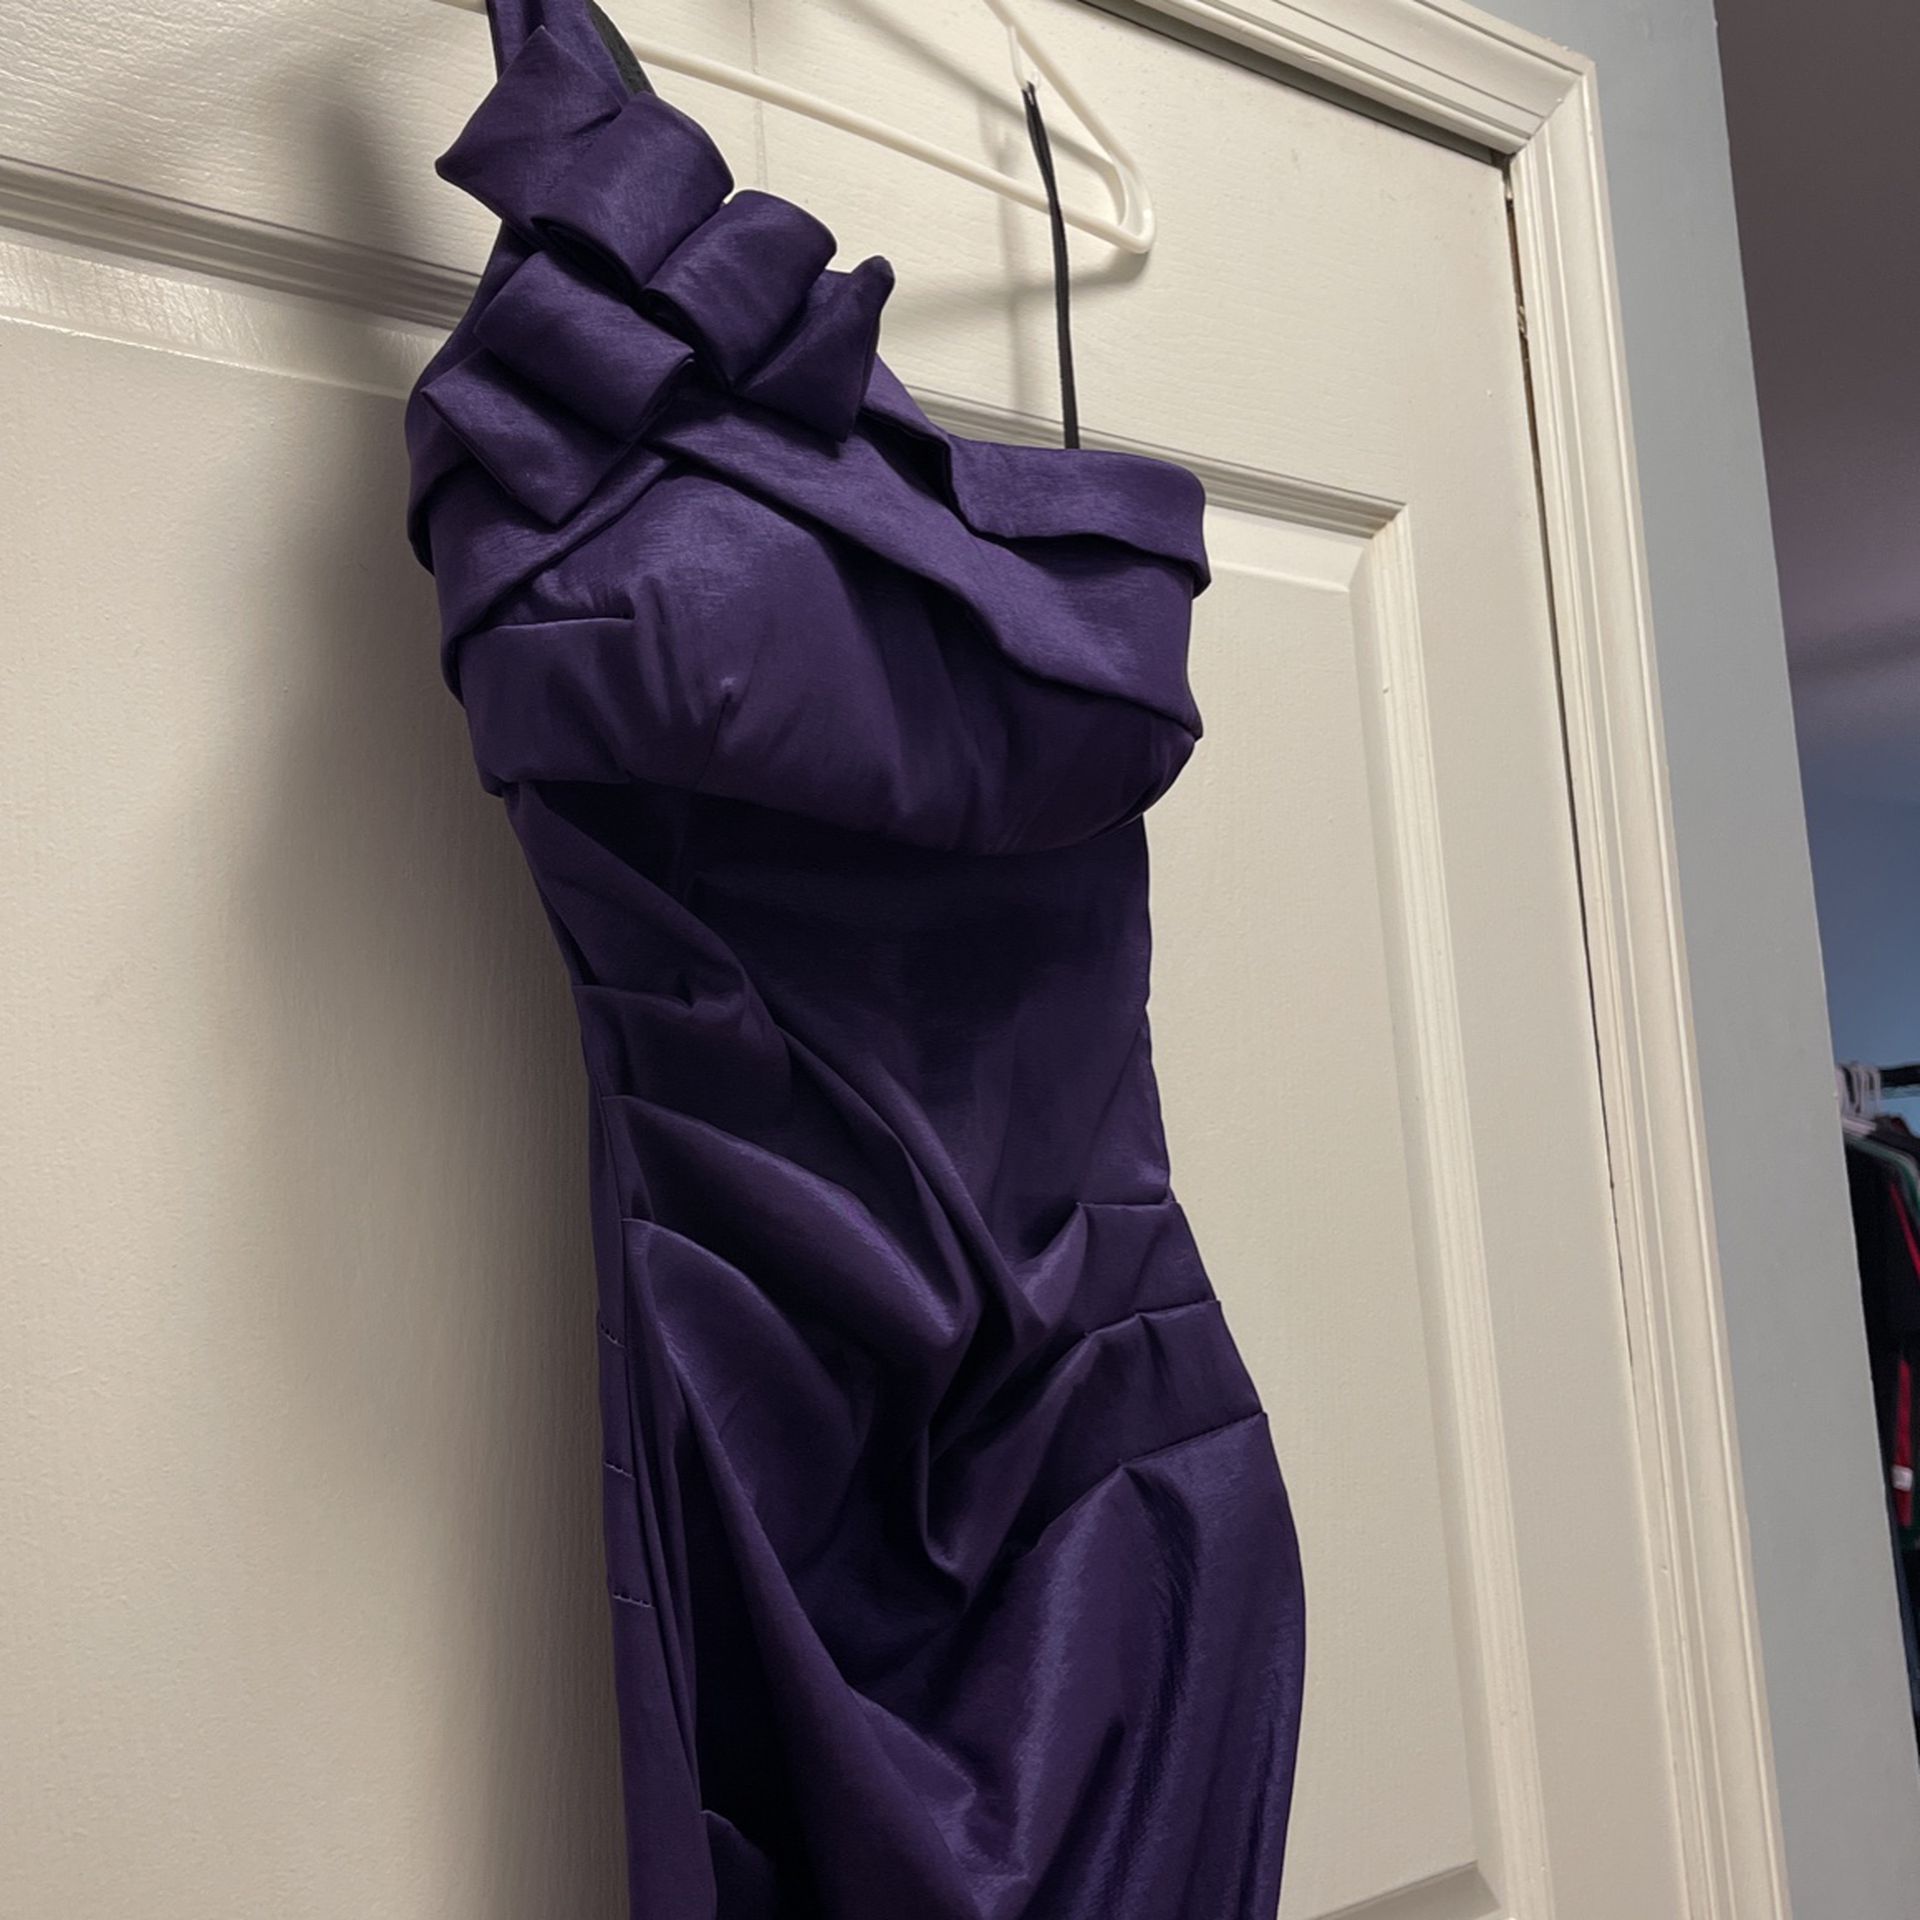 Purple Prom Dress 